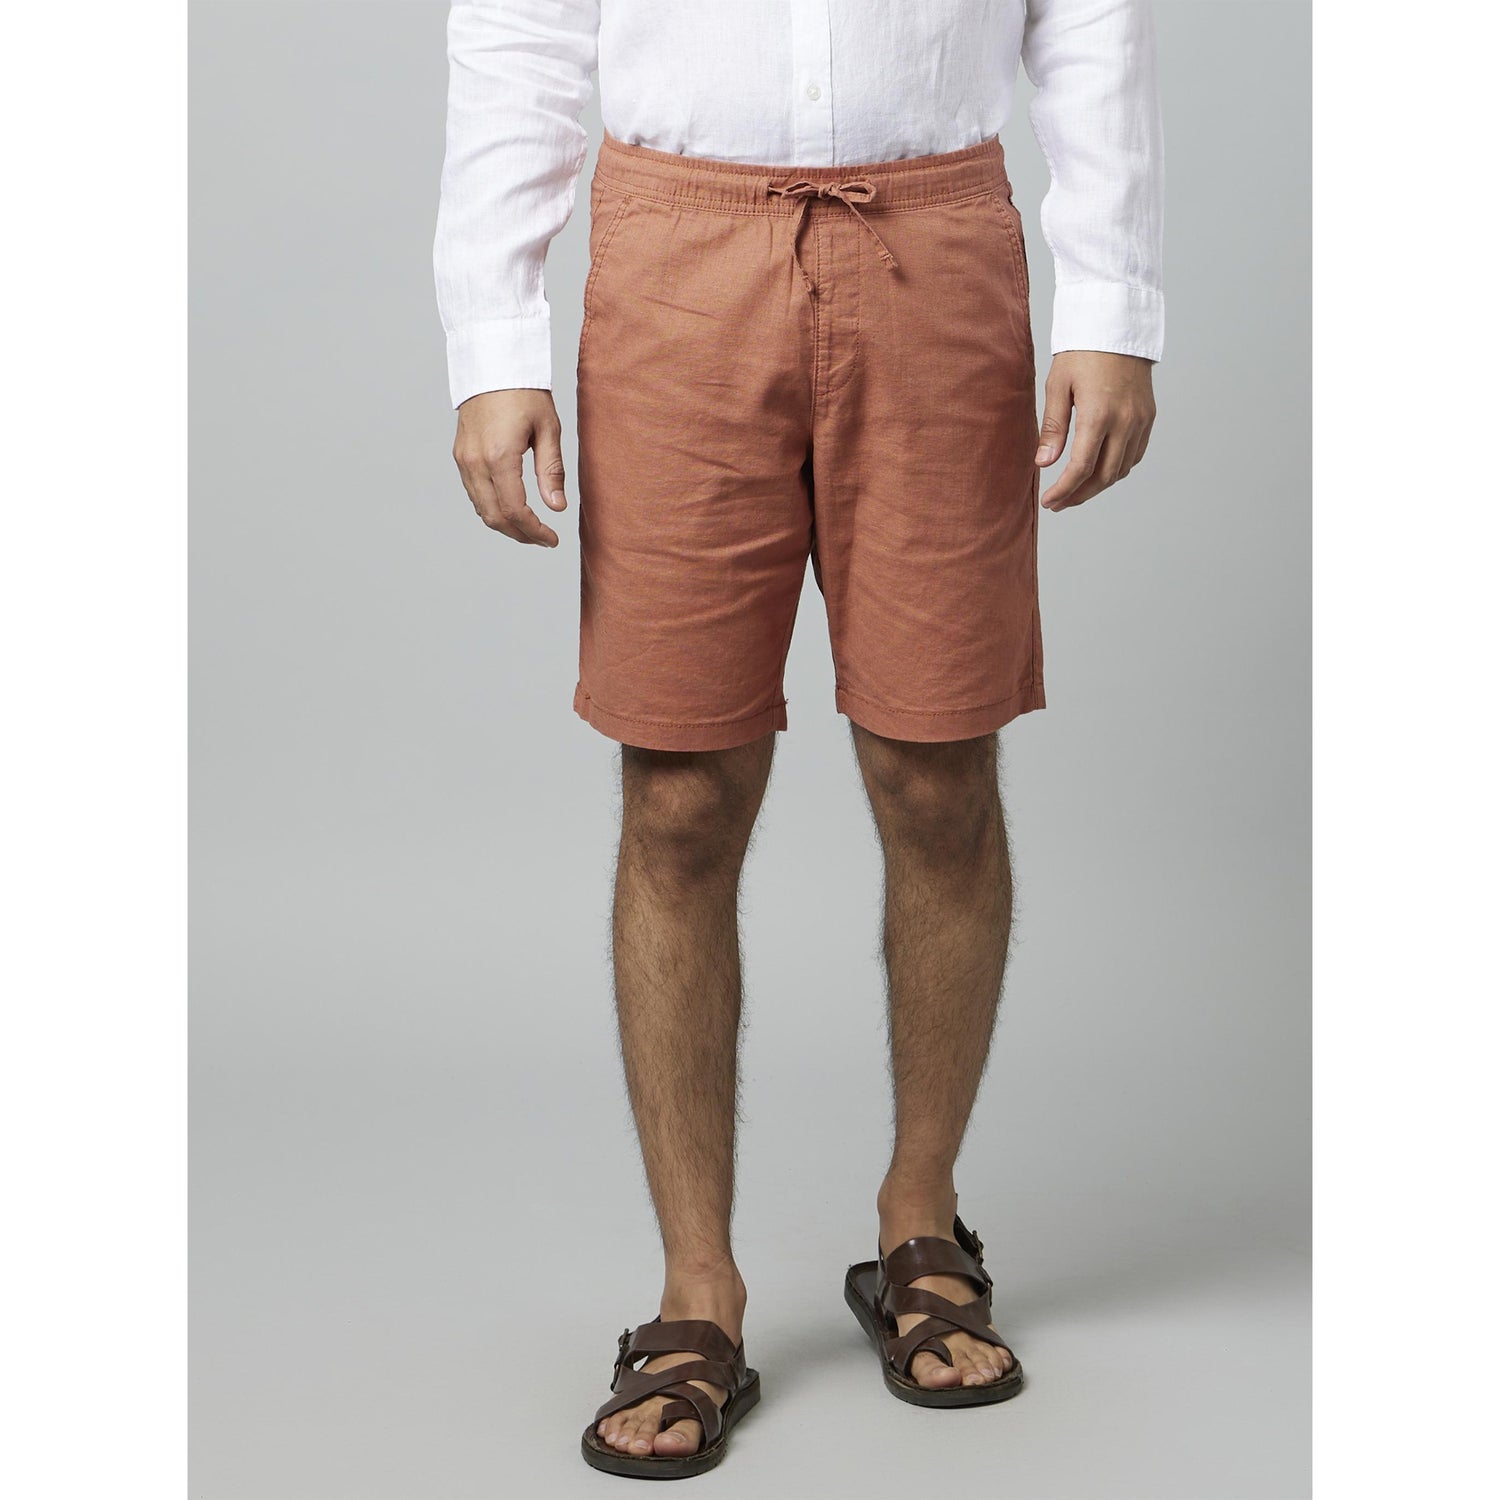 Brown Solid Mid-Rise Knee Length Cotton Regular Shorts (DOLINCOBM)